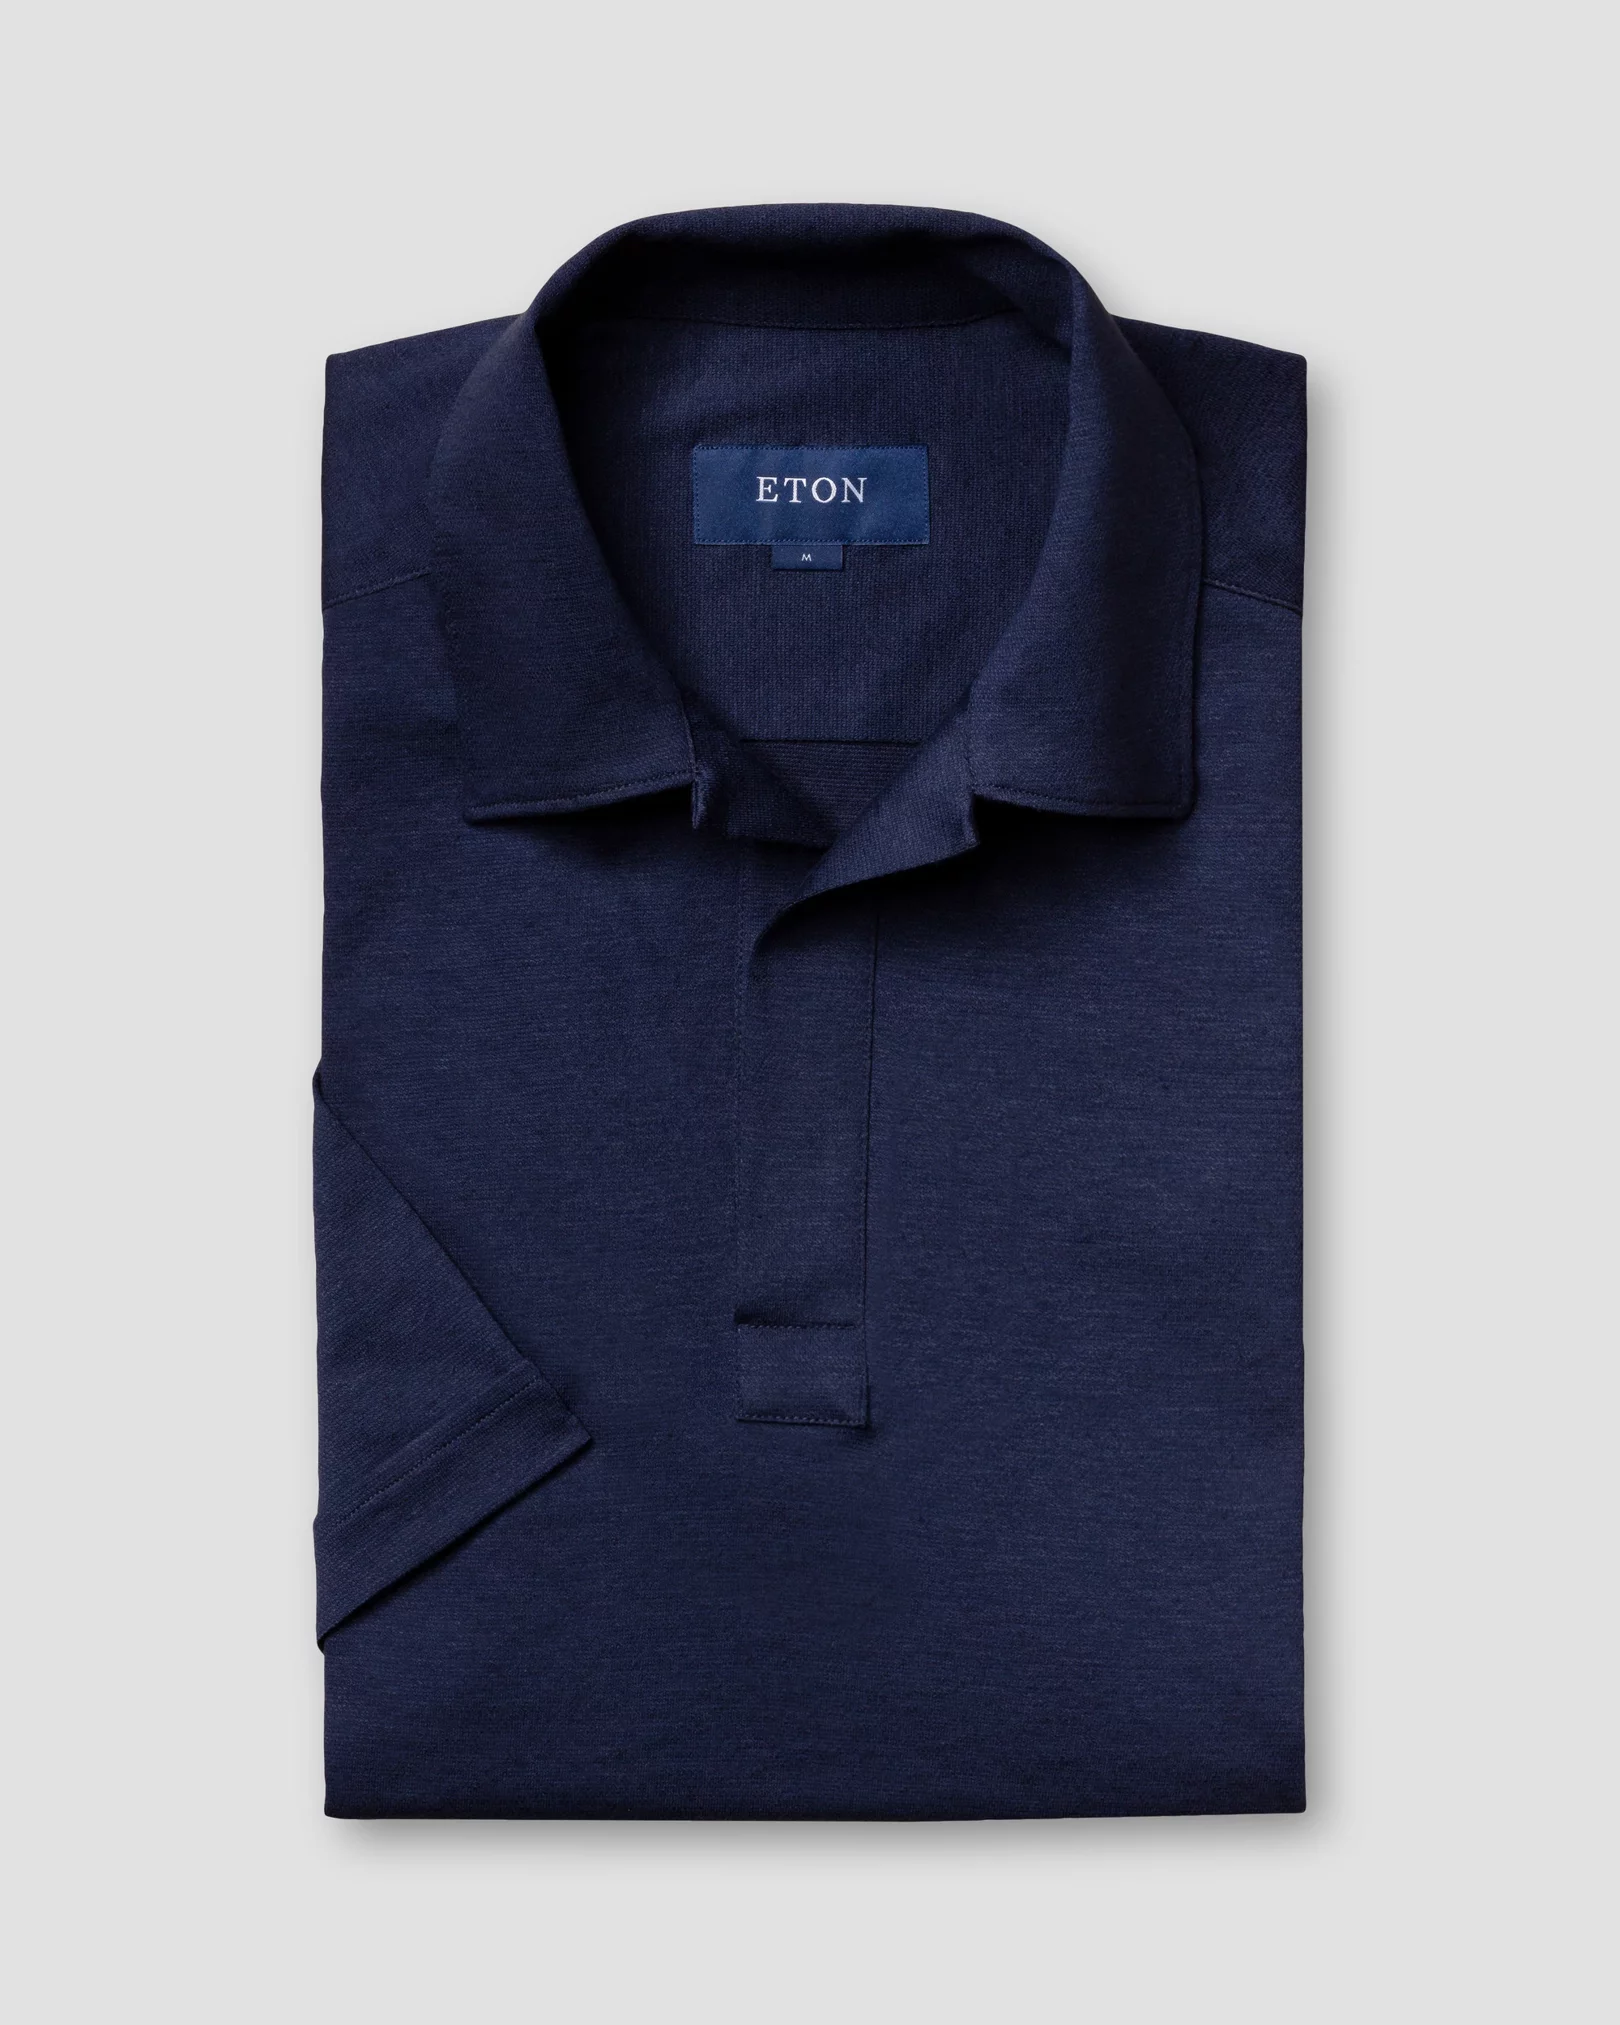 Eton - navy blue pique open cotton linen short sleeve